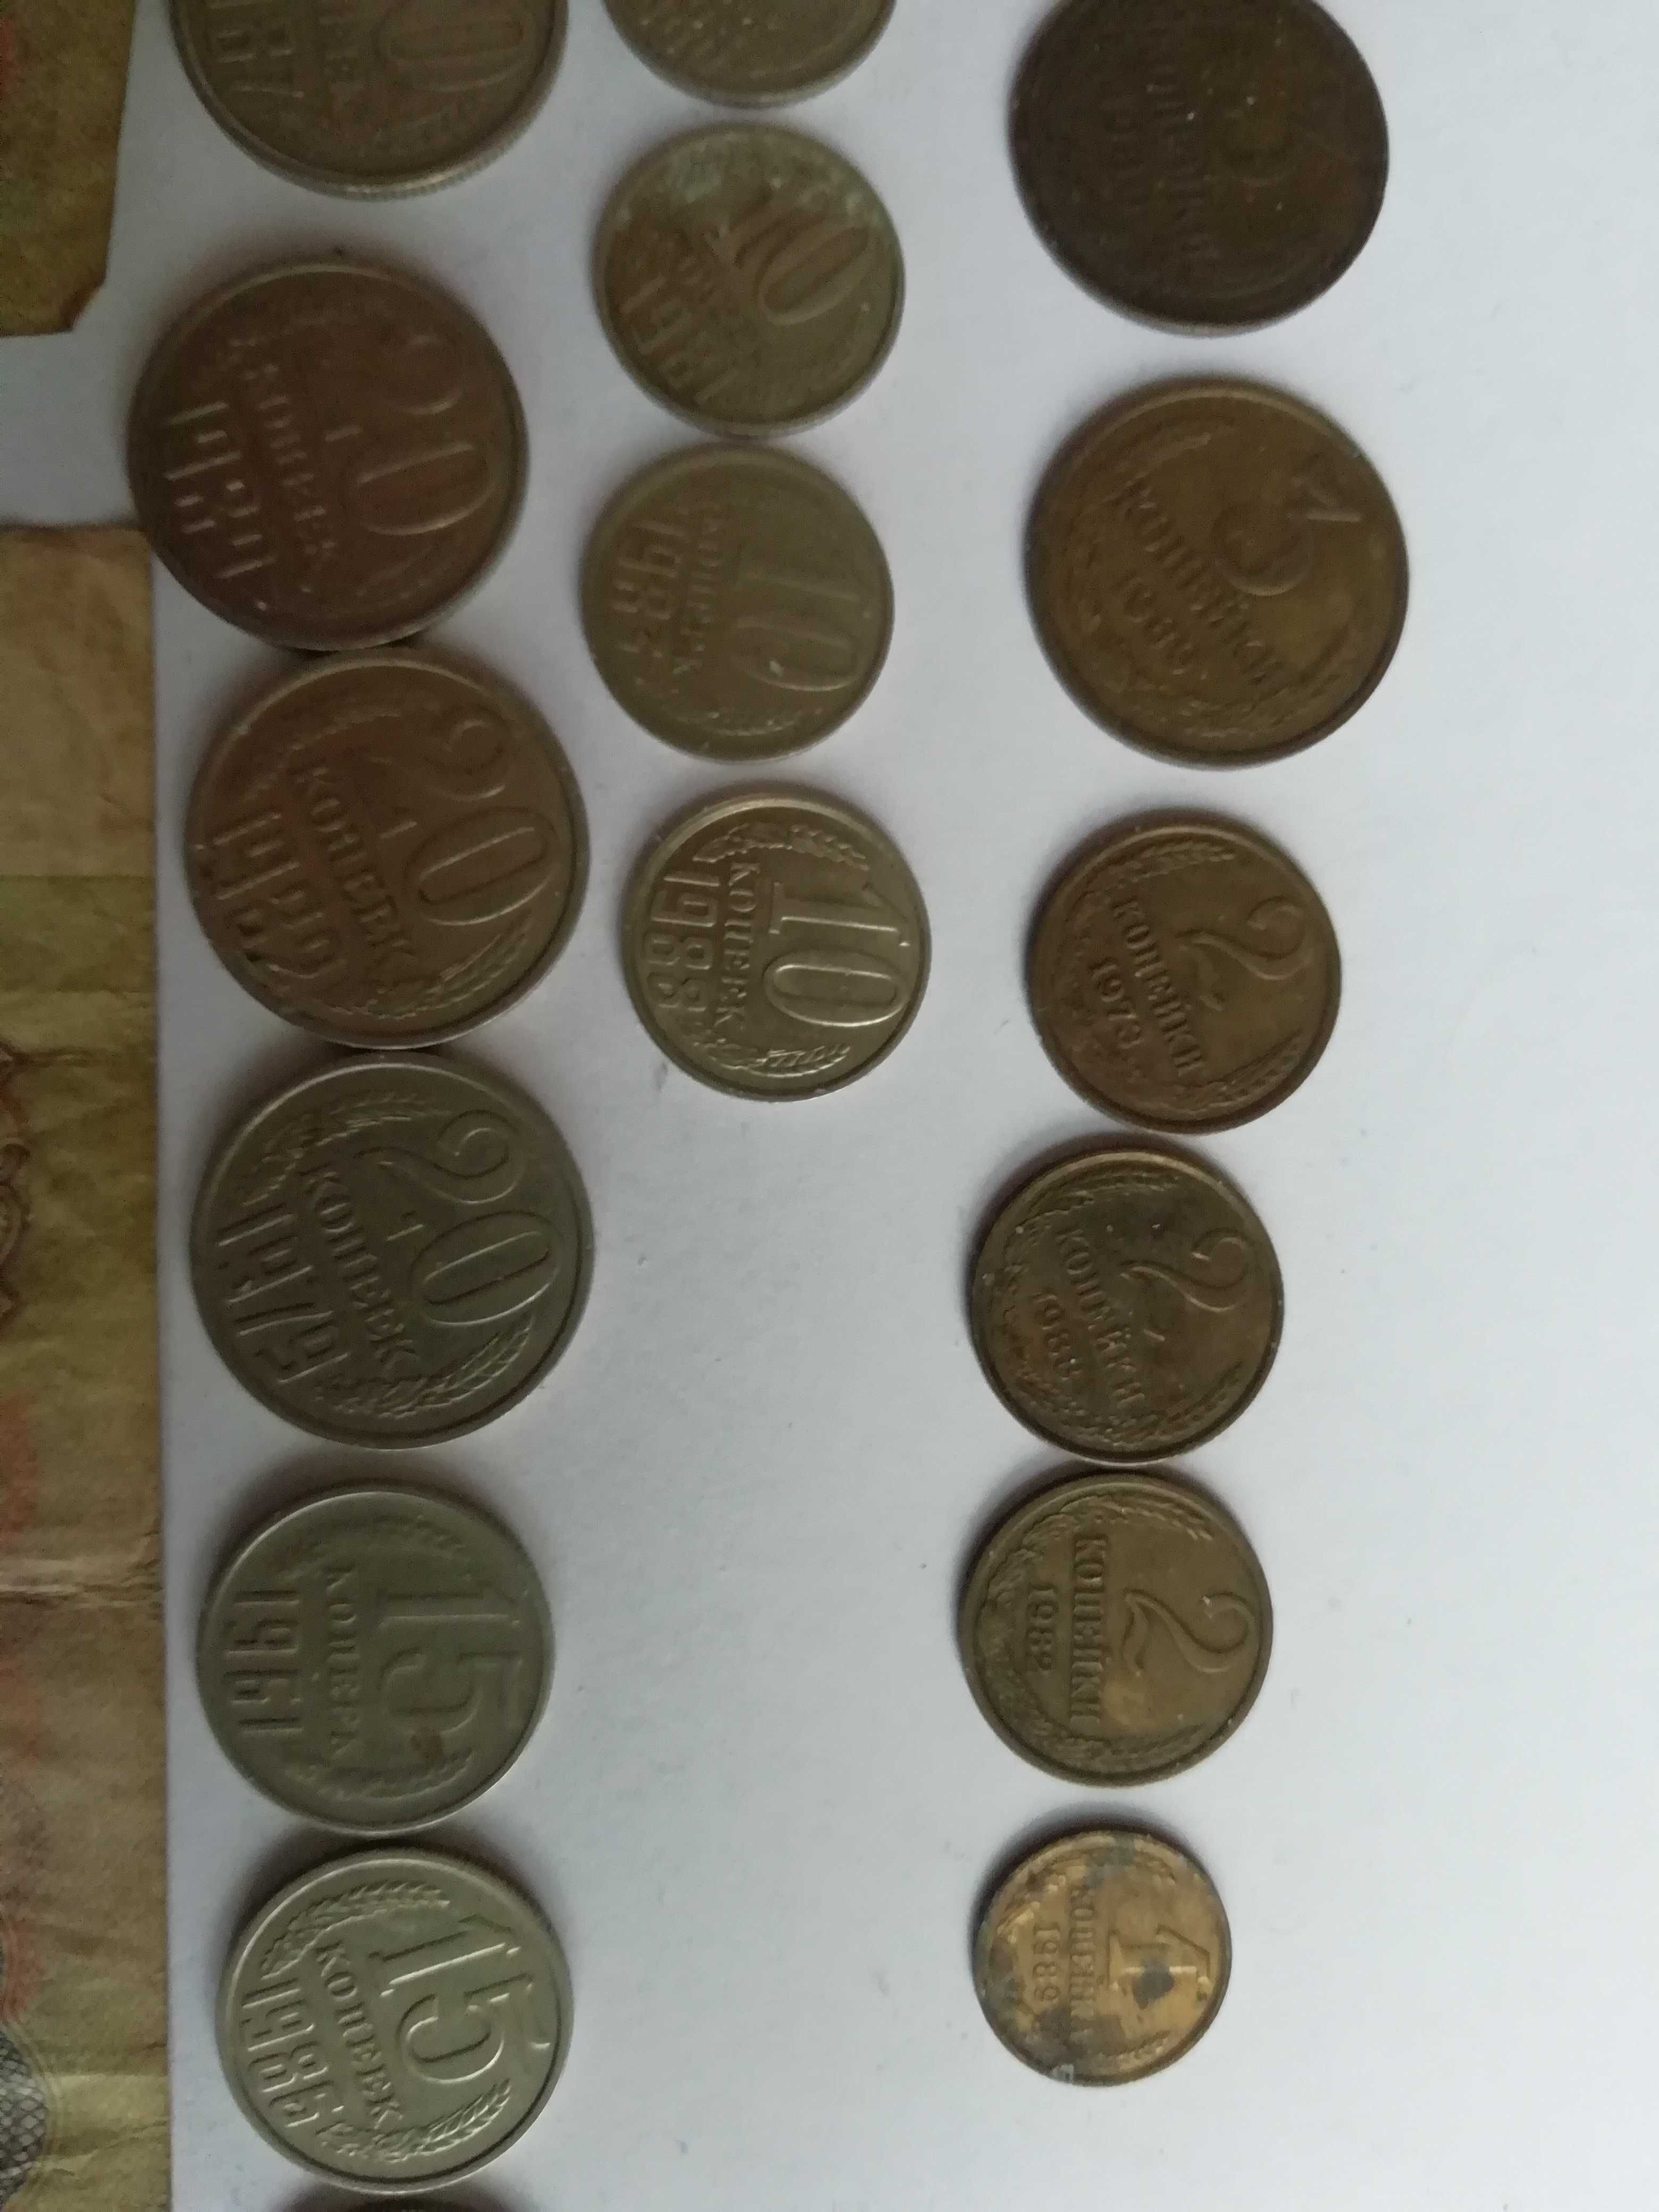 Stare monety i banknoty z dawnego ZSRR